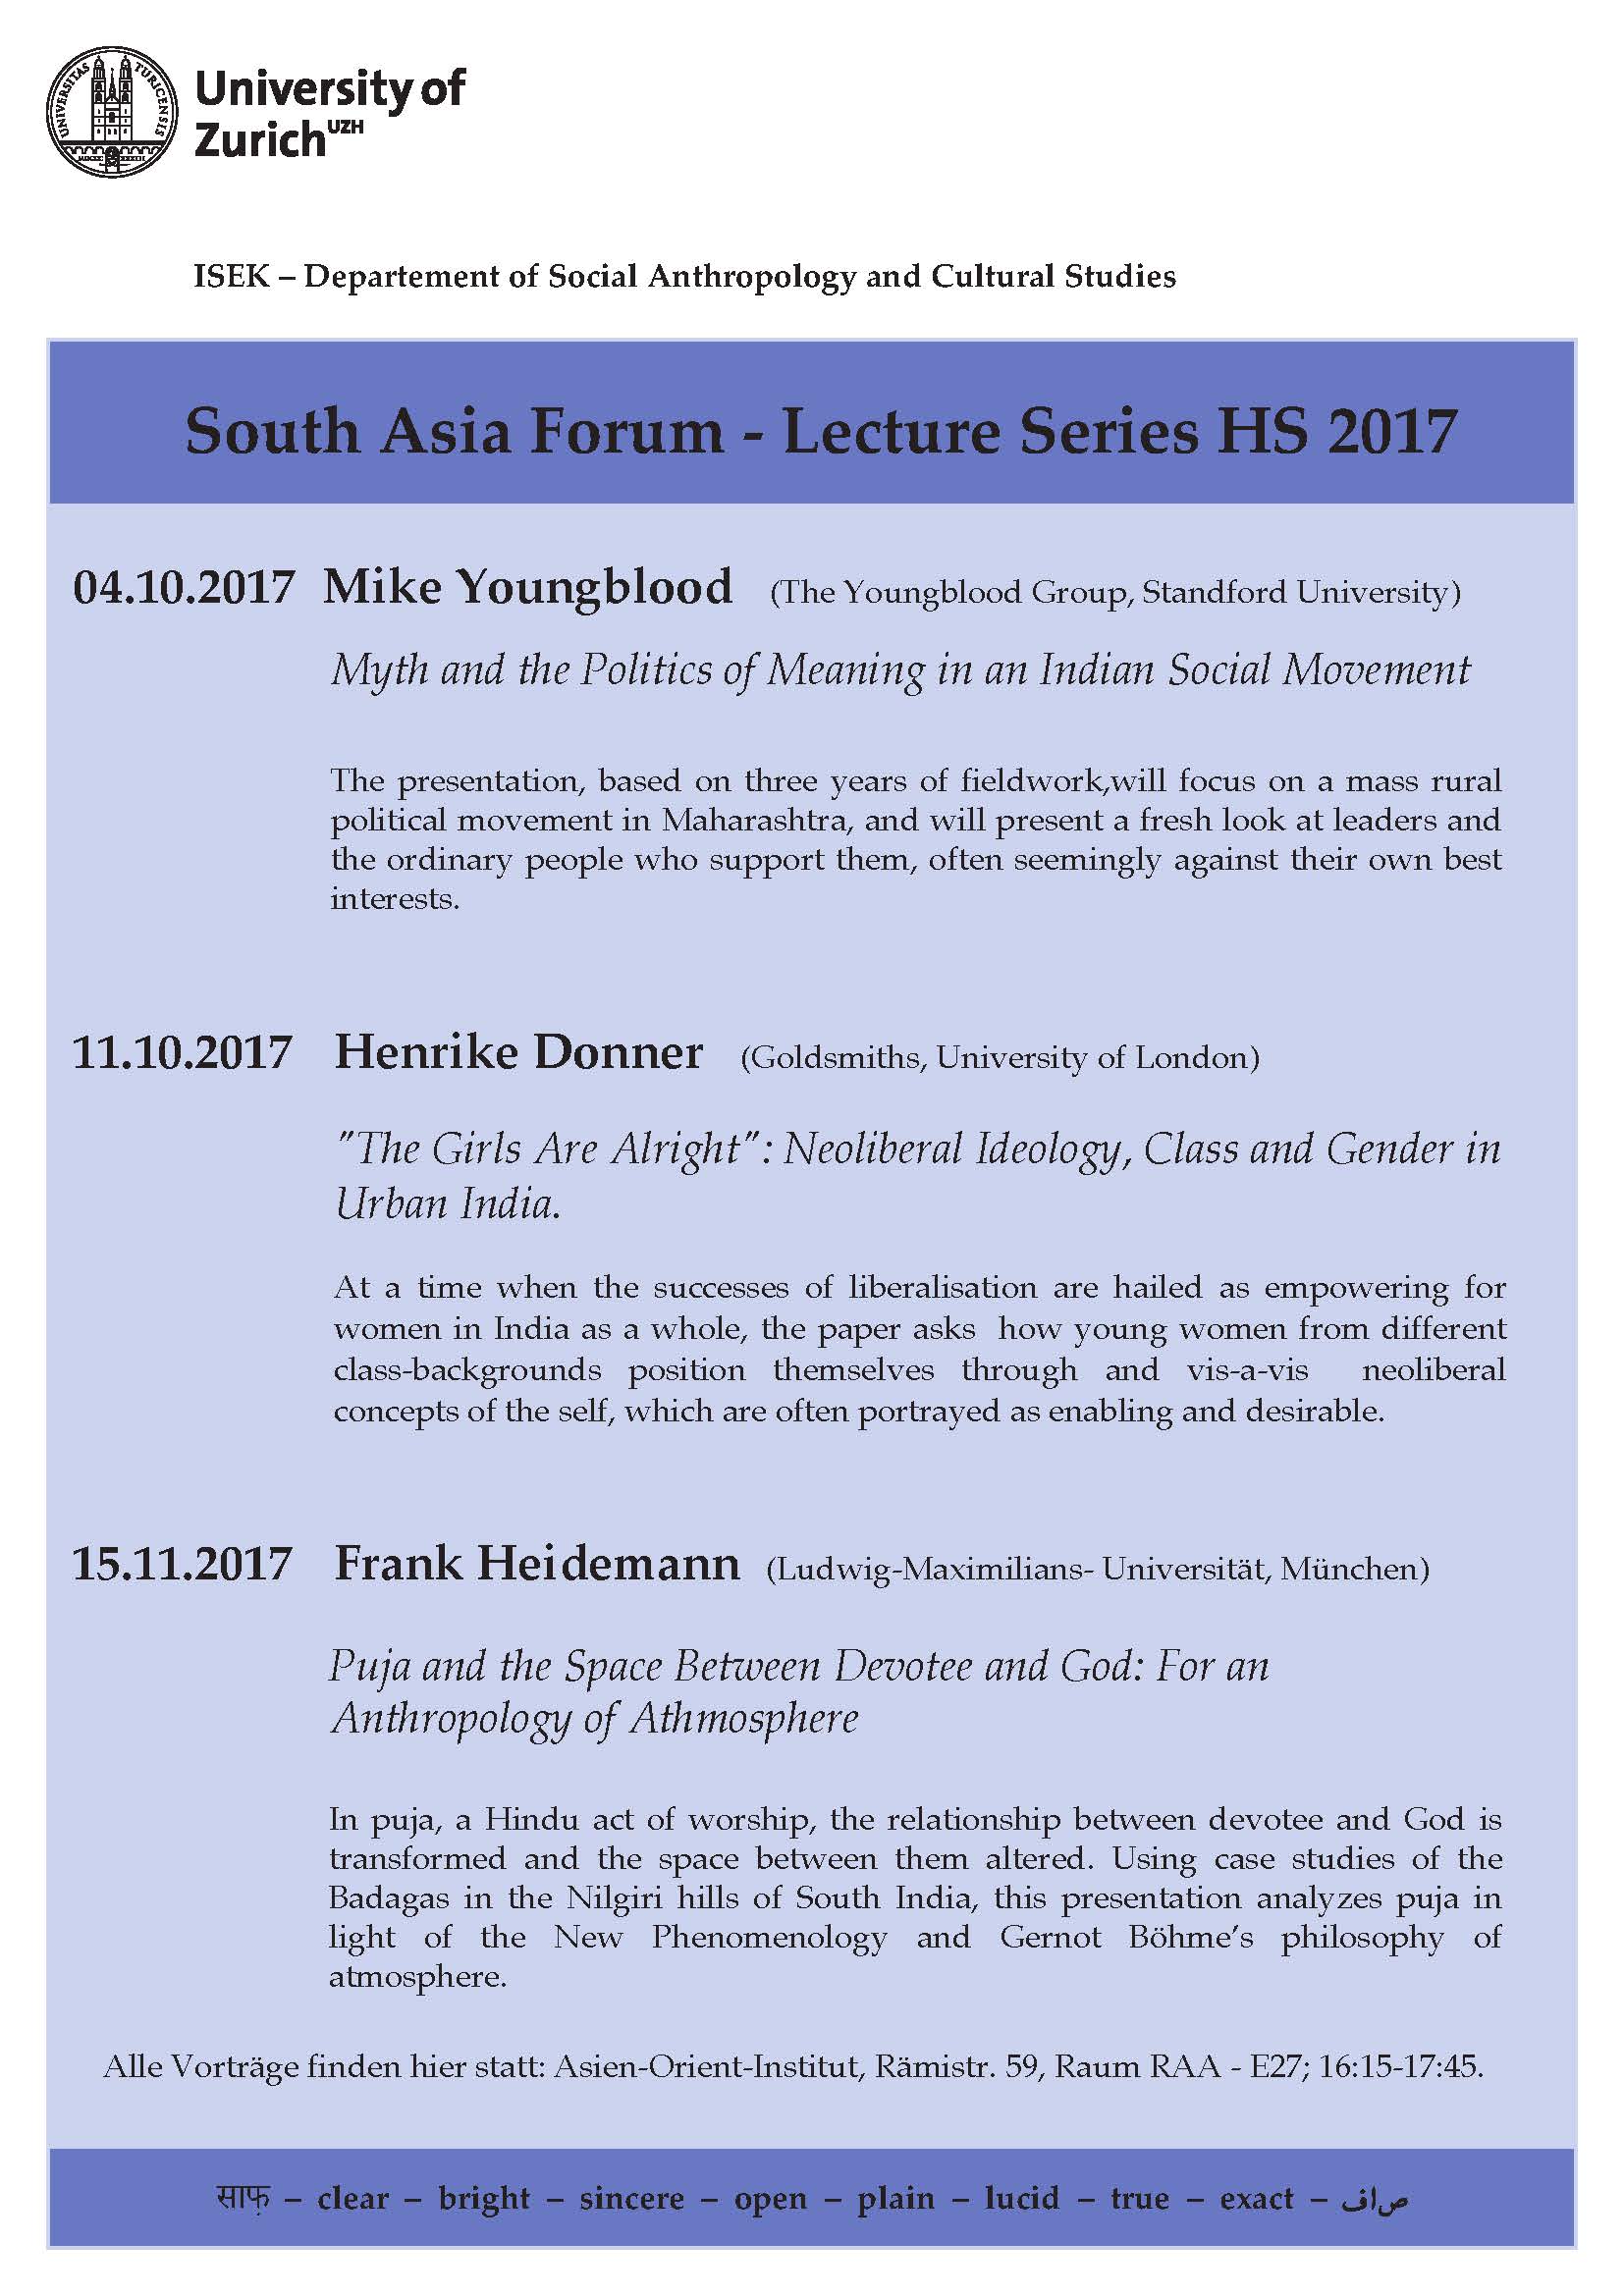 SAF Lecture Series HS17